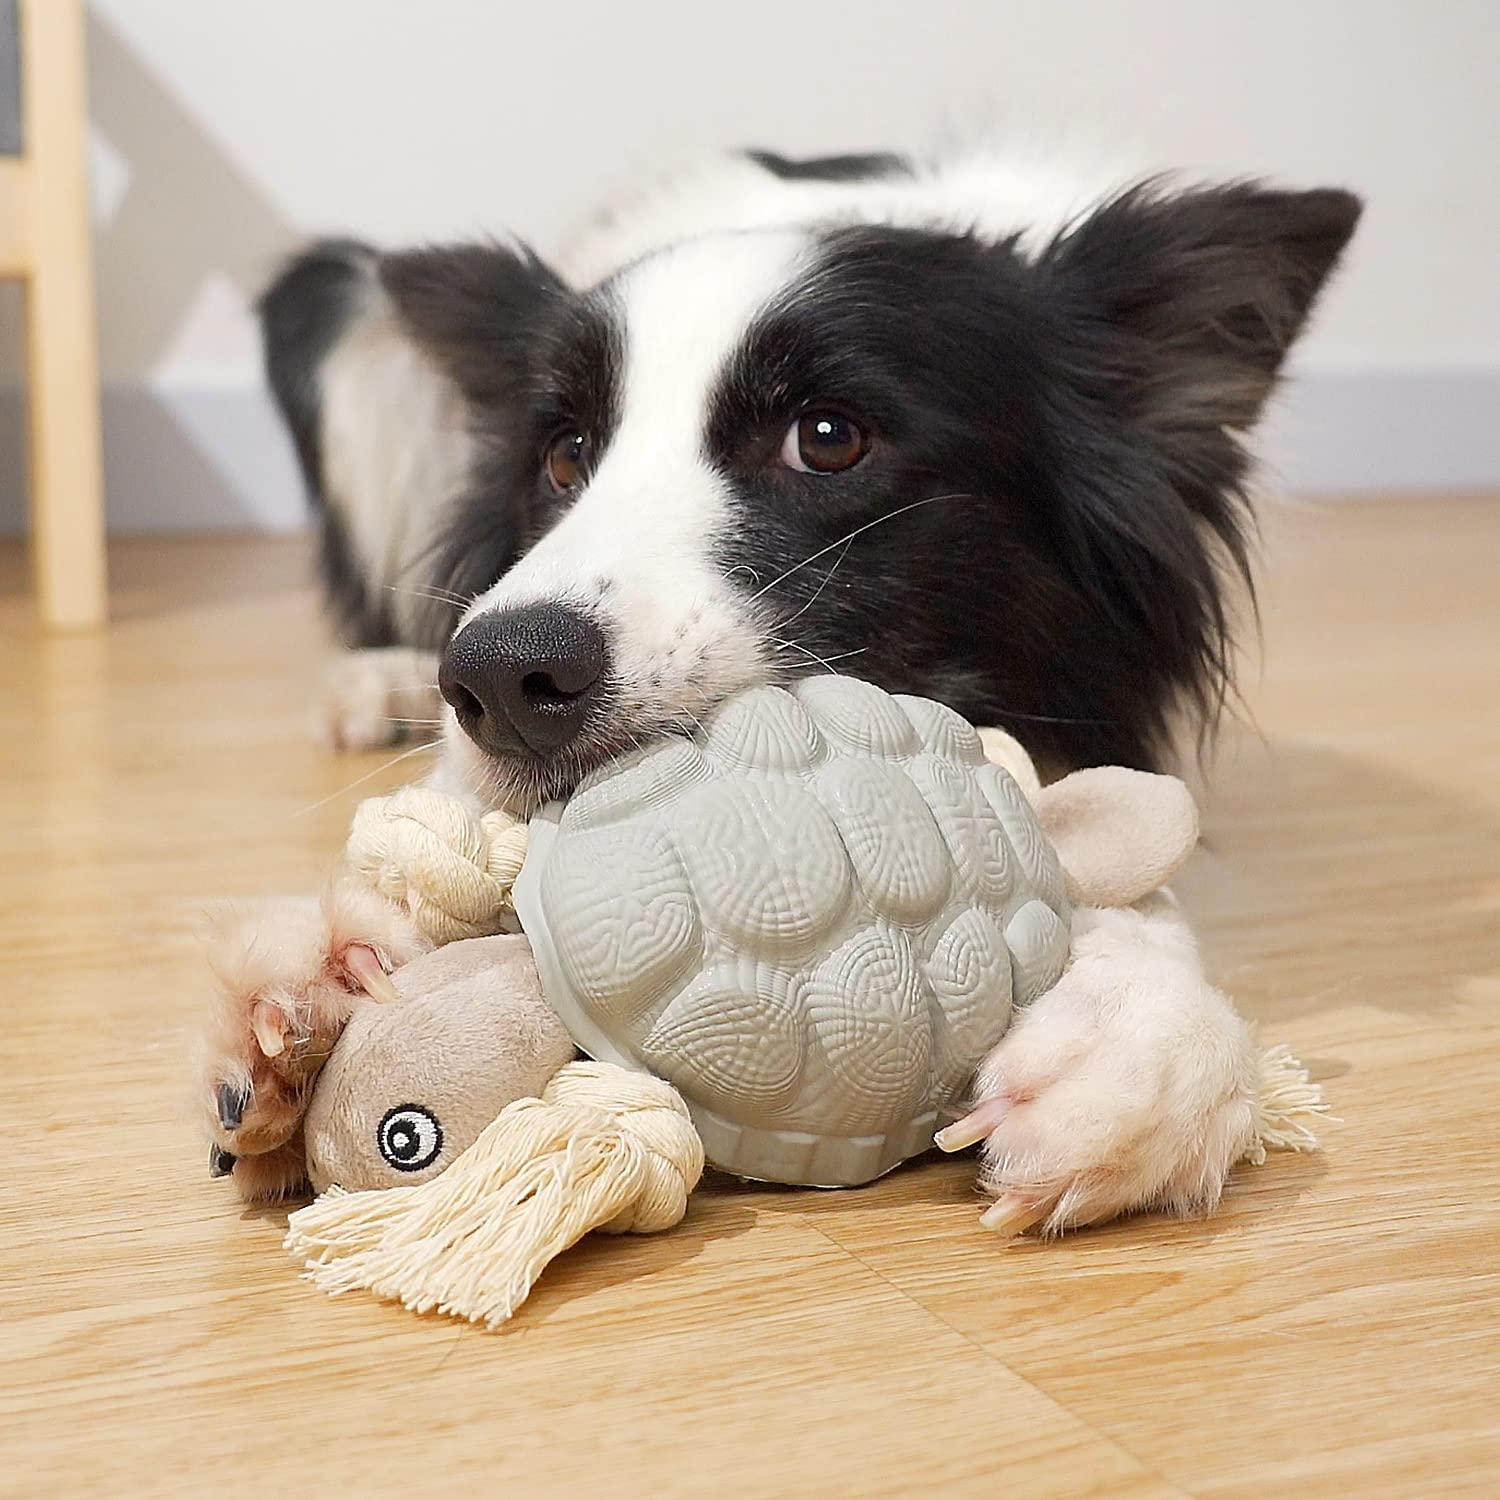 Sedioso Plush Dog Toy,Interactive Stuffed Fox Dog Toys for Boredom